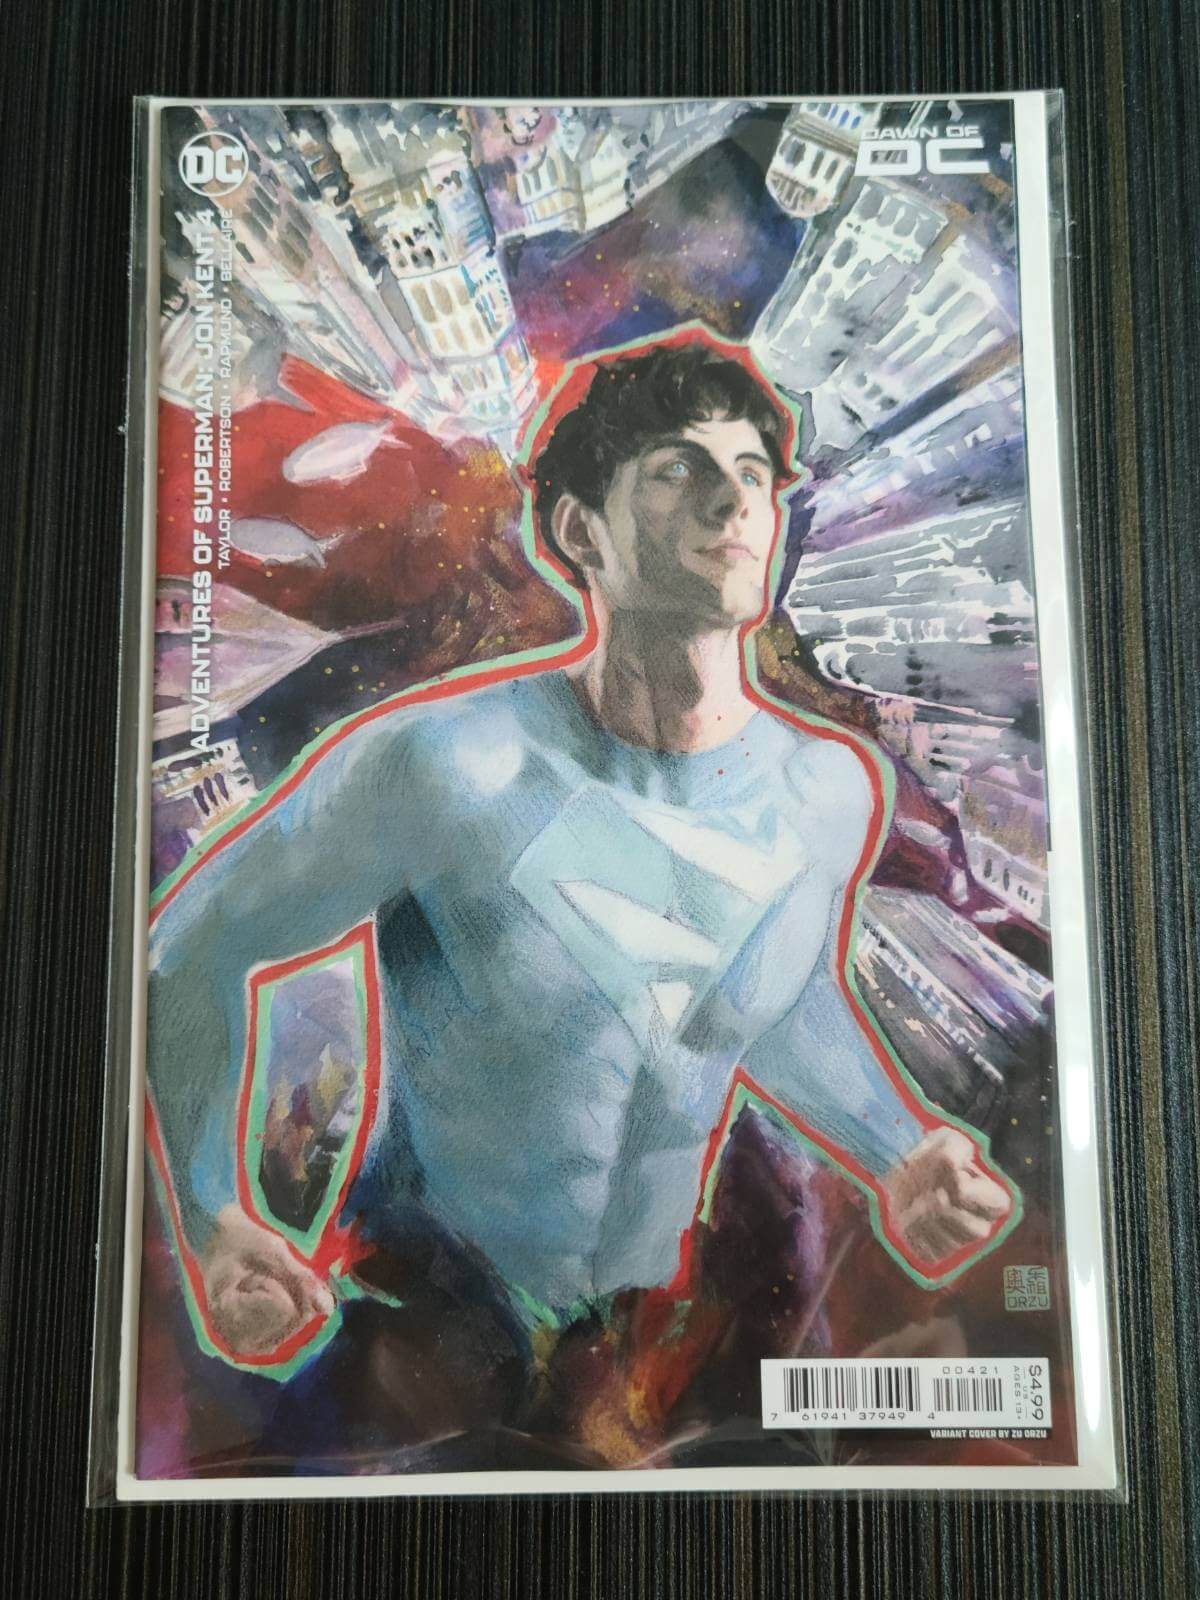 ADVENTURES OF SUPERMAN JON KENT #4 (OF 6) CVR B ZU ORZU CARD STOCK VAR